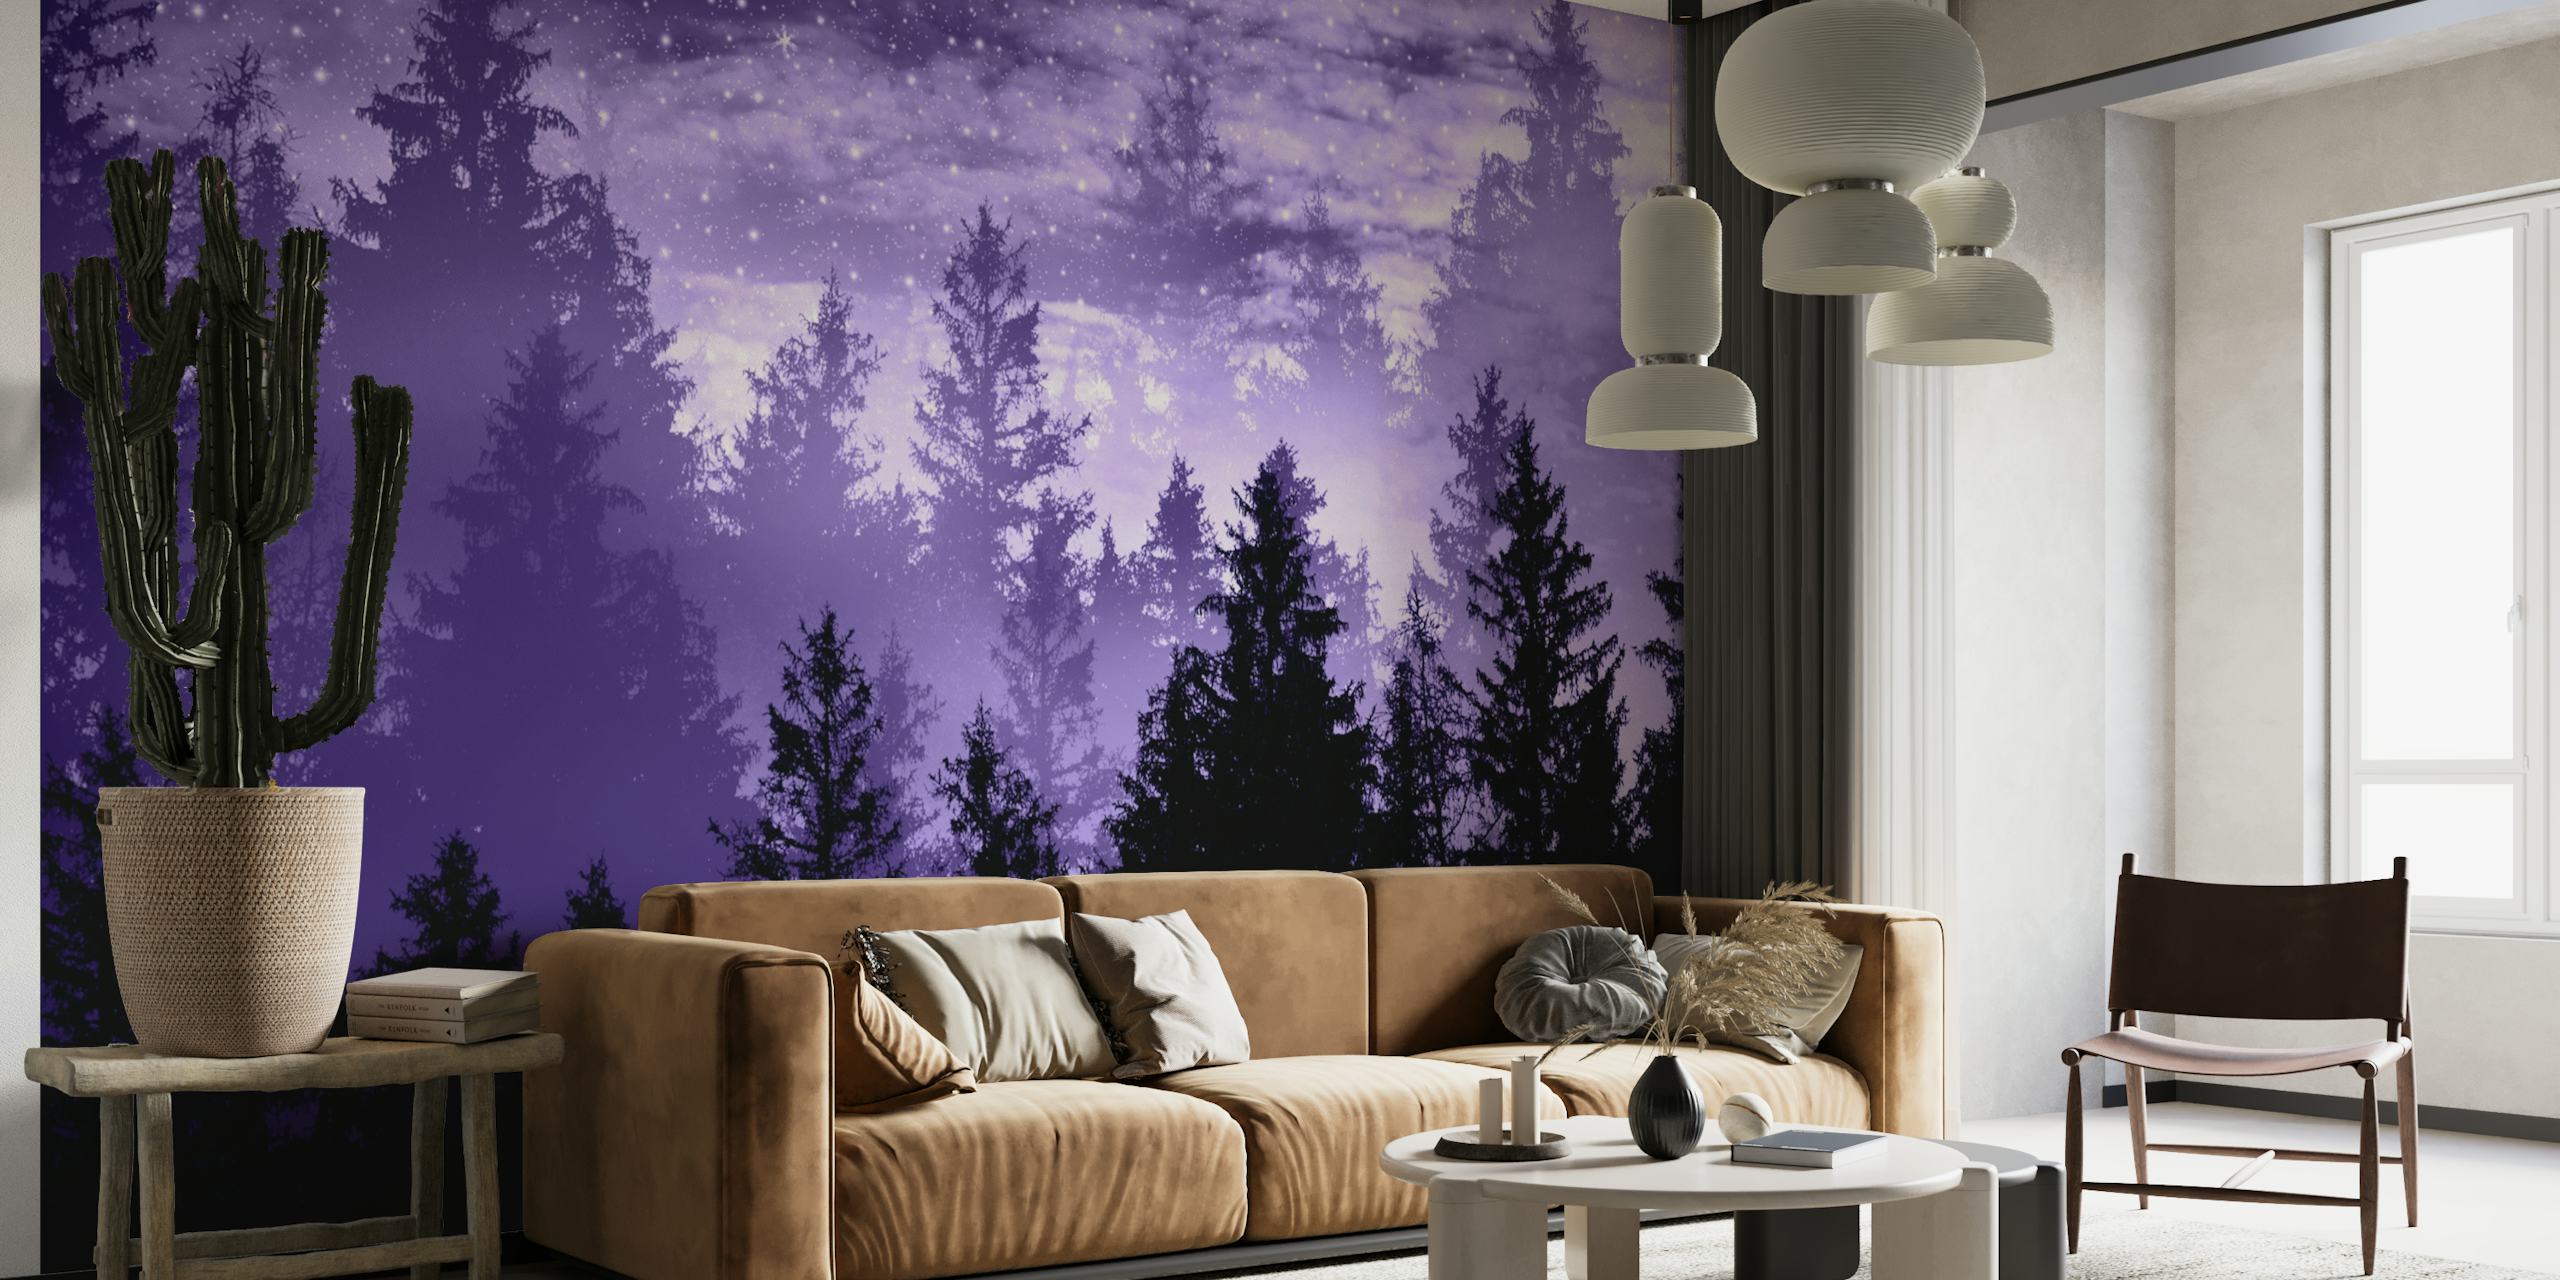 Forest Galaxy Dream 2 wallpaper